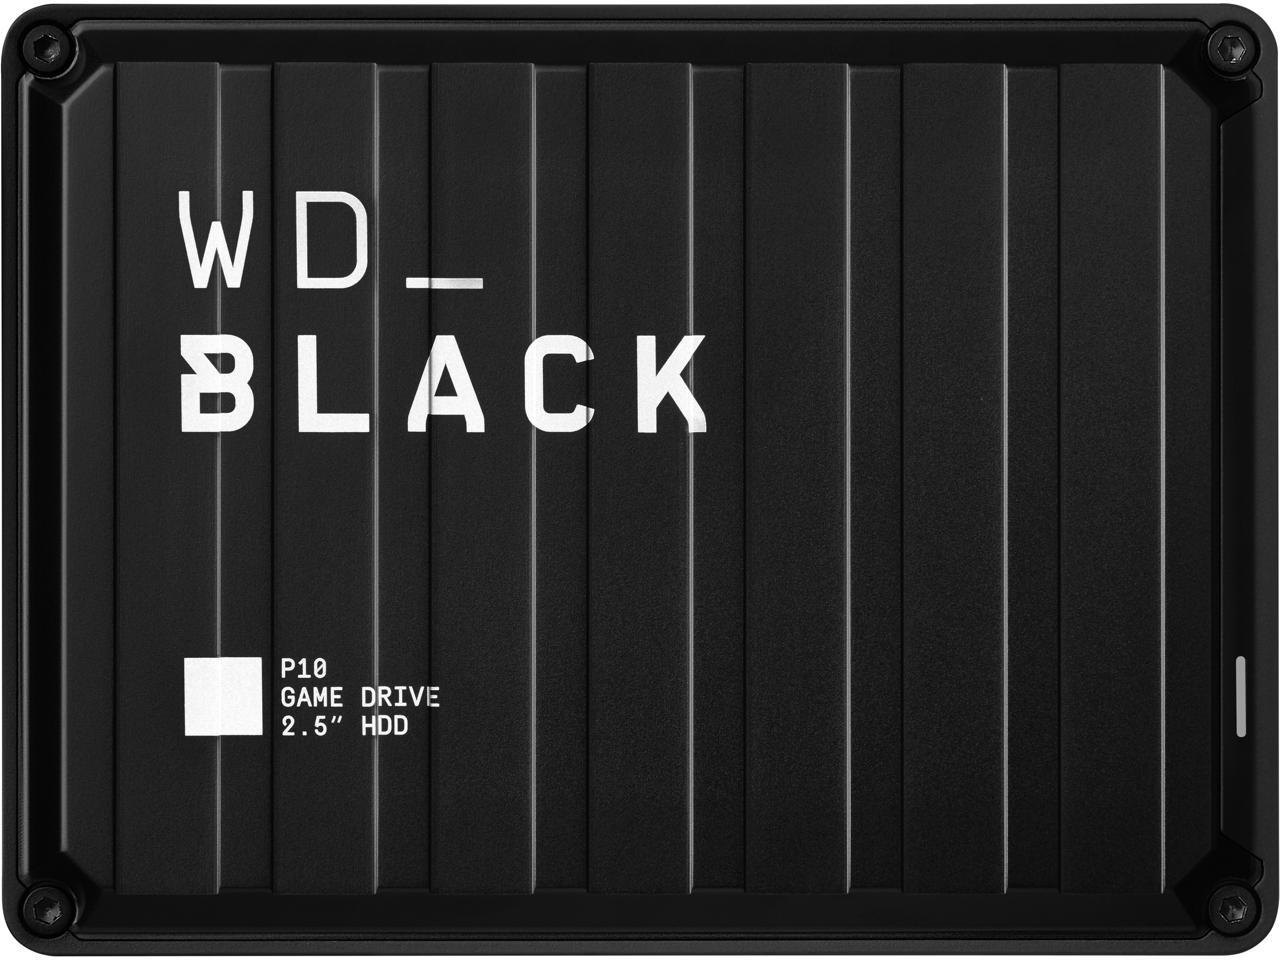 WD Black 5TB P10 Game Drive Portable External Hard Drive $105